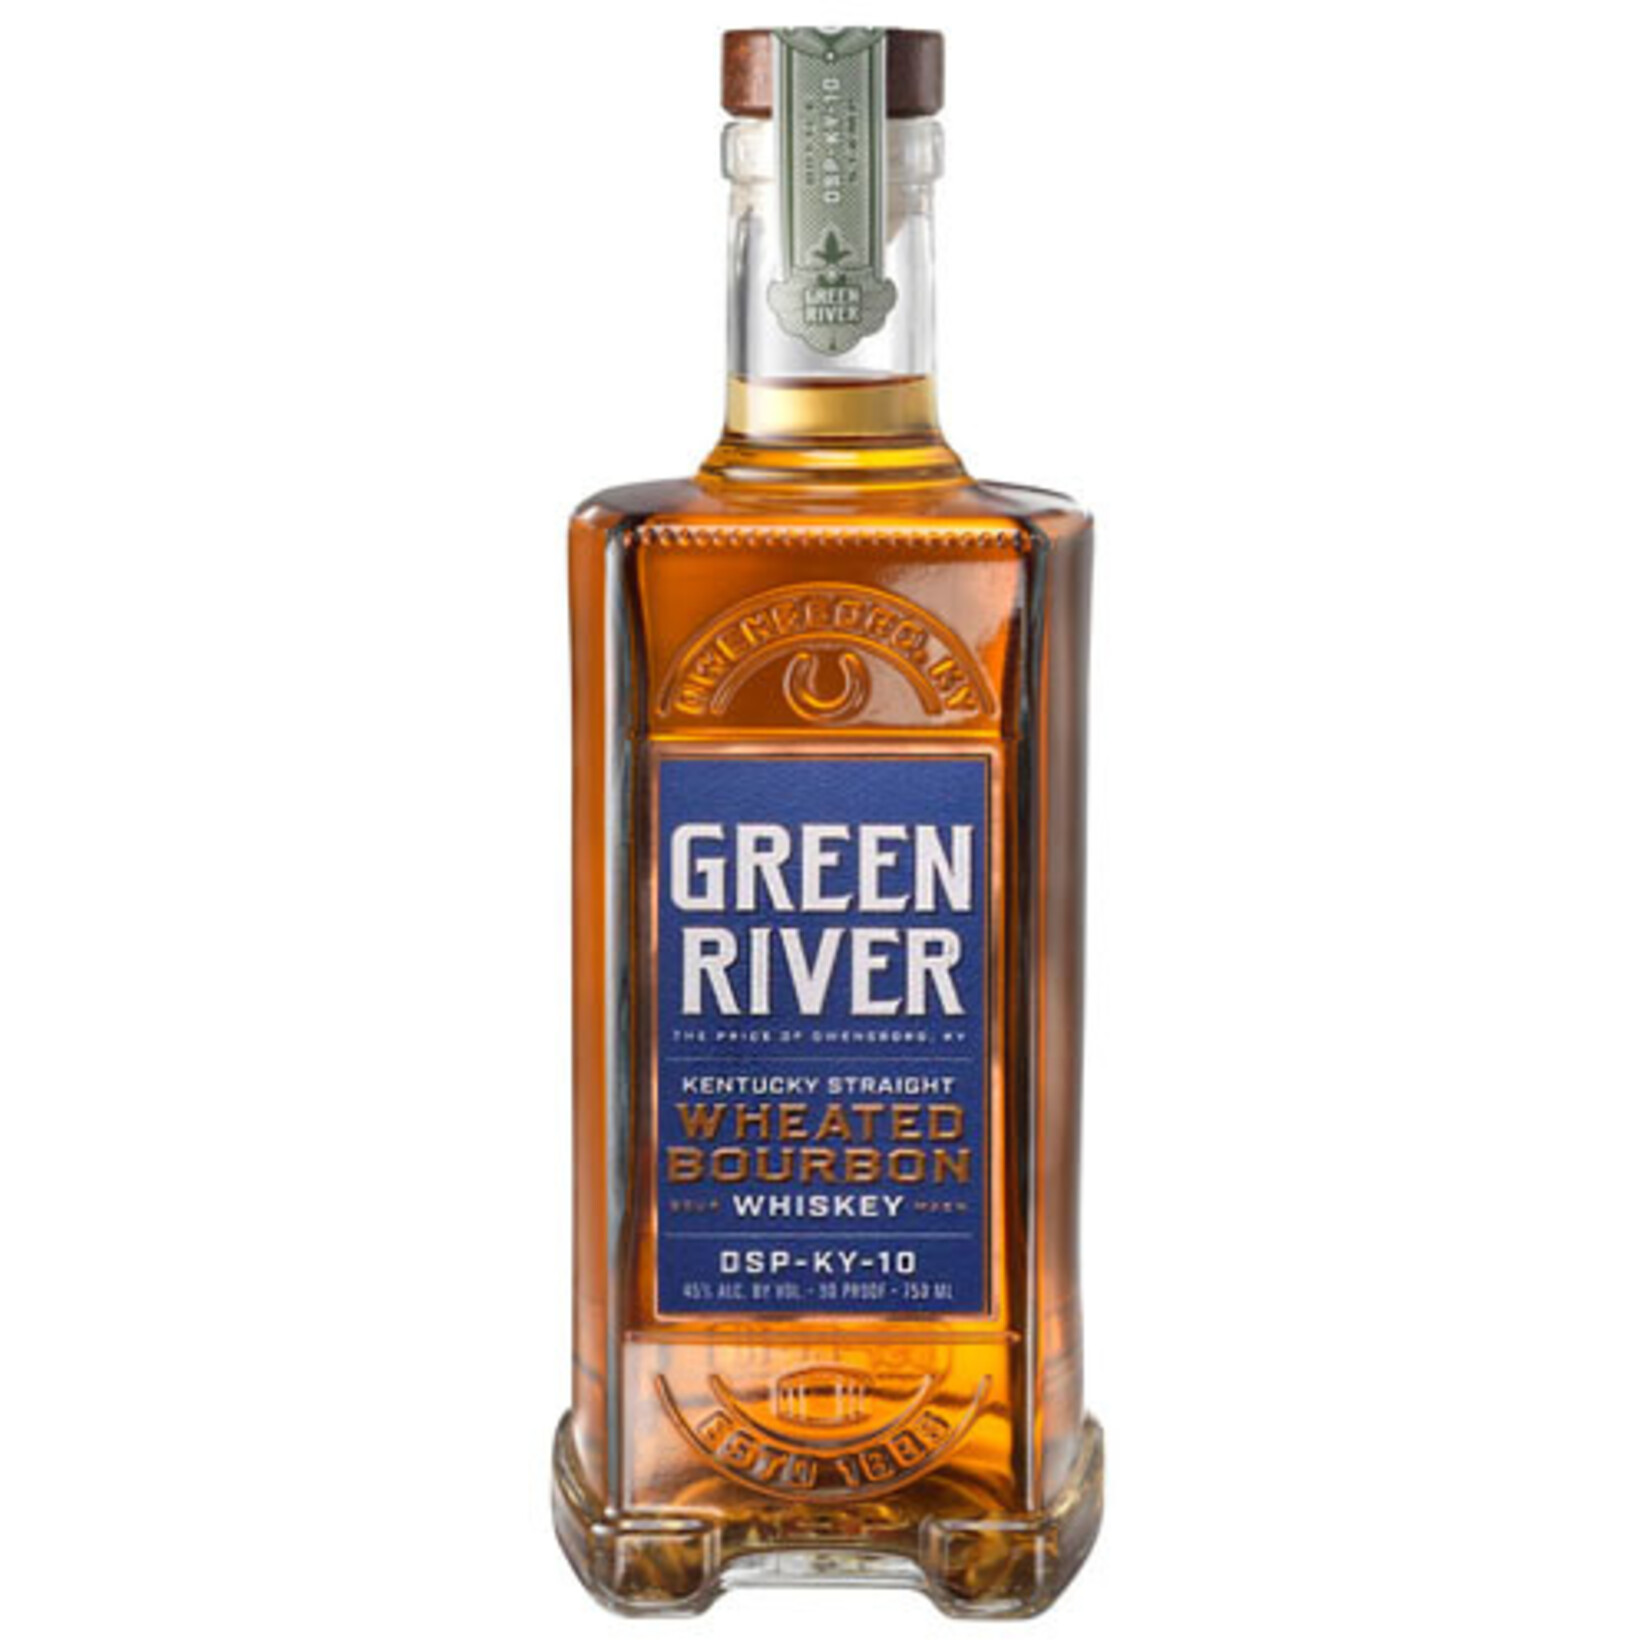 Green River Kentucky Straight Wheated Bourbon 750 mL